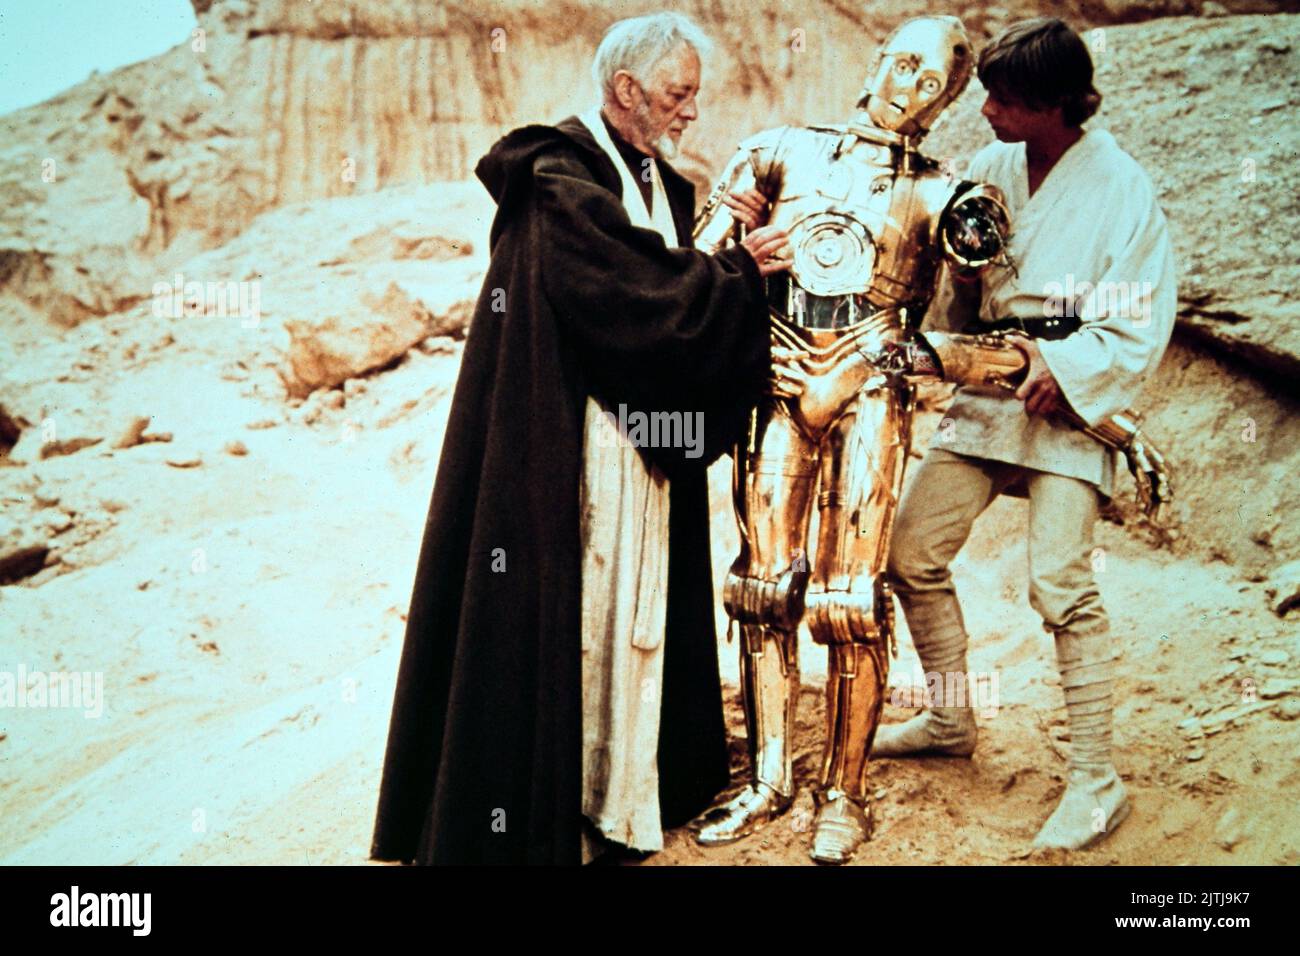 Star Wars, aka Krieg der Sterne, USA 1977, Regie: George Lucas, Charaktere: Alec Guinness als OBI WAN Kenobi, C-3PO et Mark Hamill als Luke Skywalker Banque D'Images